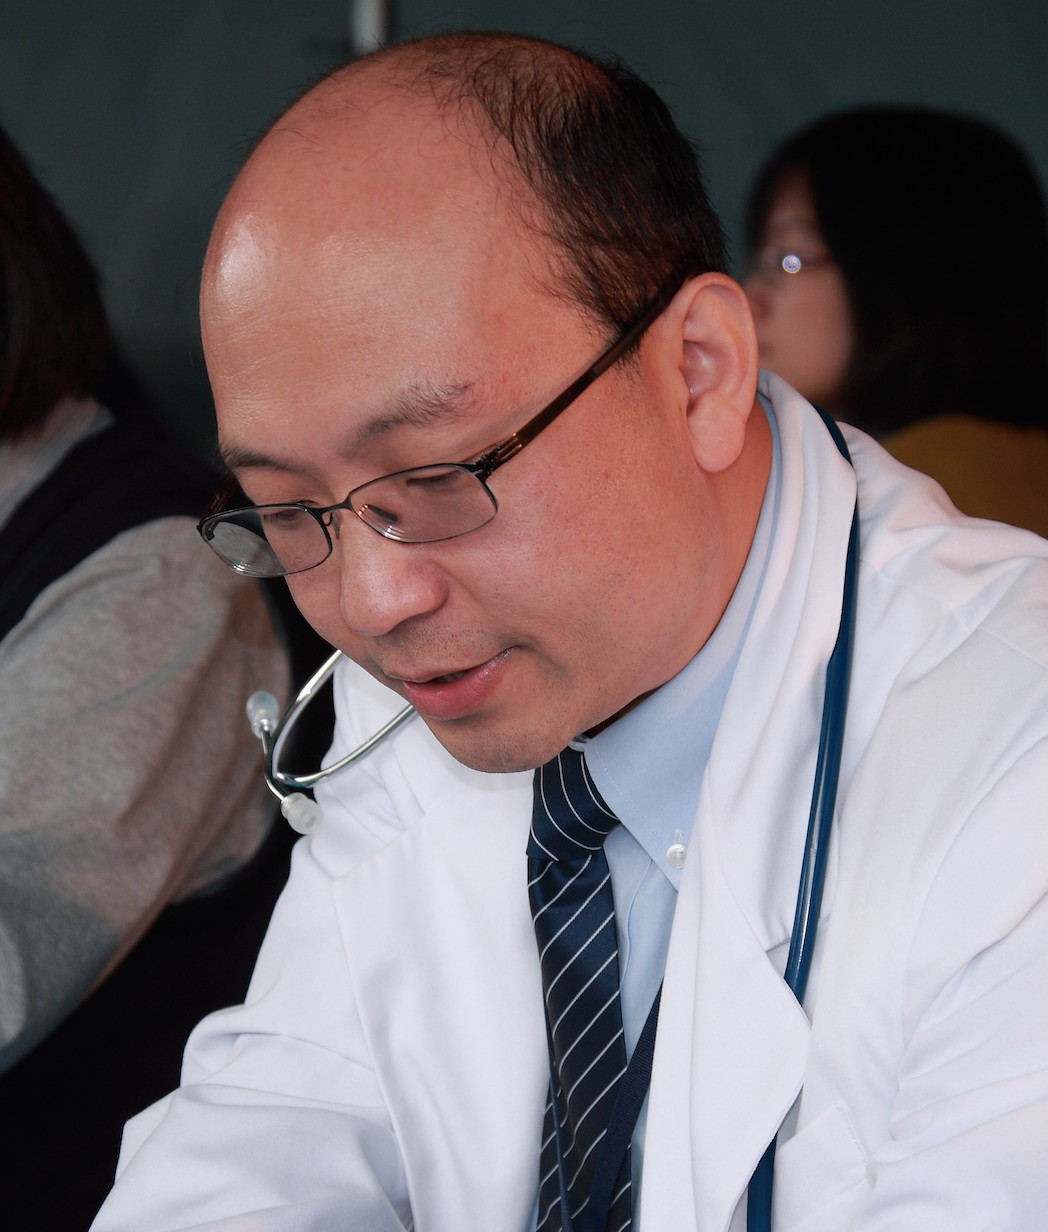 Dr Yong Instructing